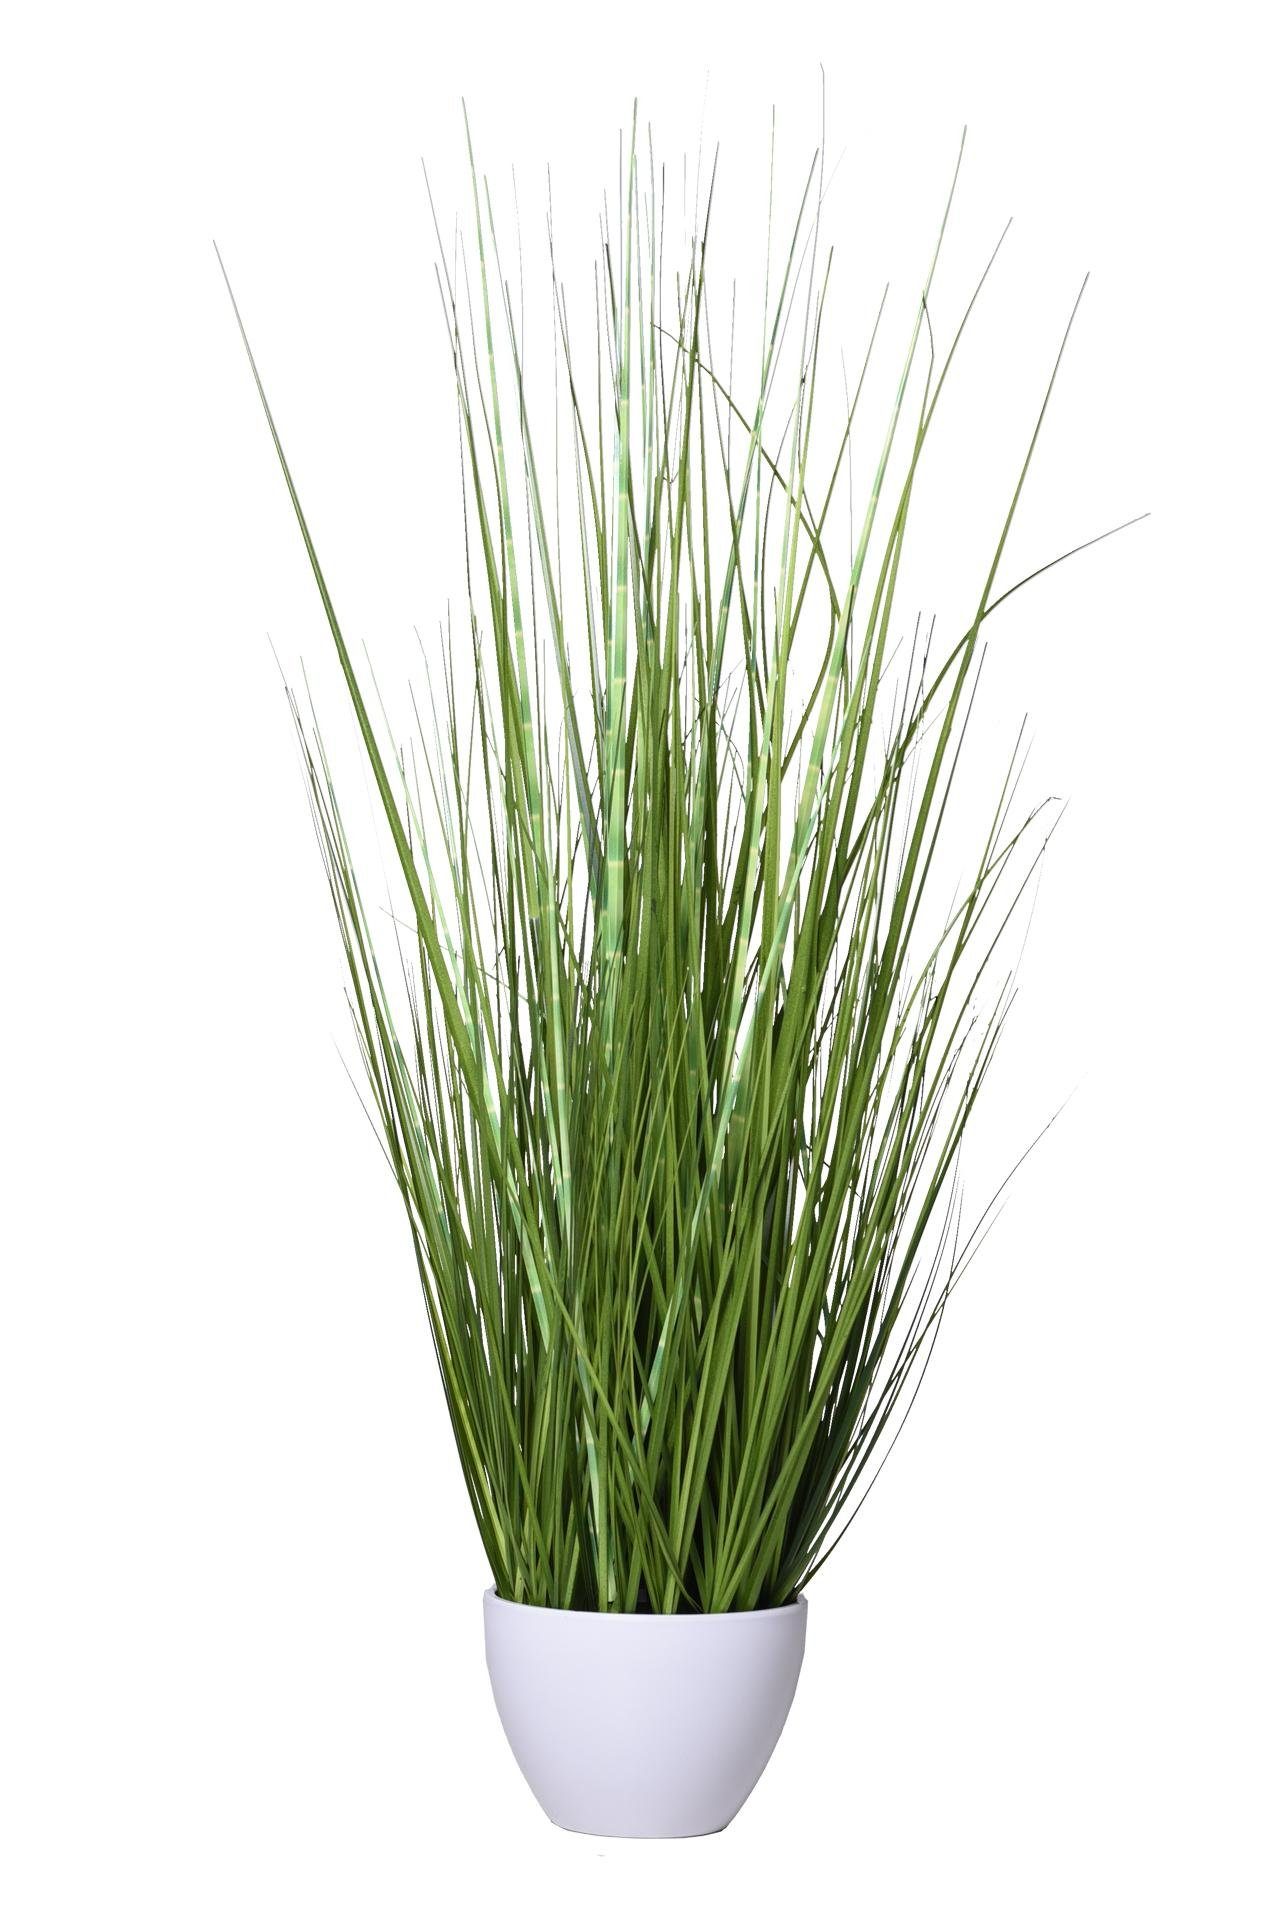 - Gras Zebragras Topf Höhe VIVANNO, 75 im Kunstpflanze cm ZEBRA Kunstpflanze Grün, Kunstgras künstlich